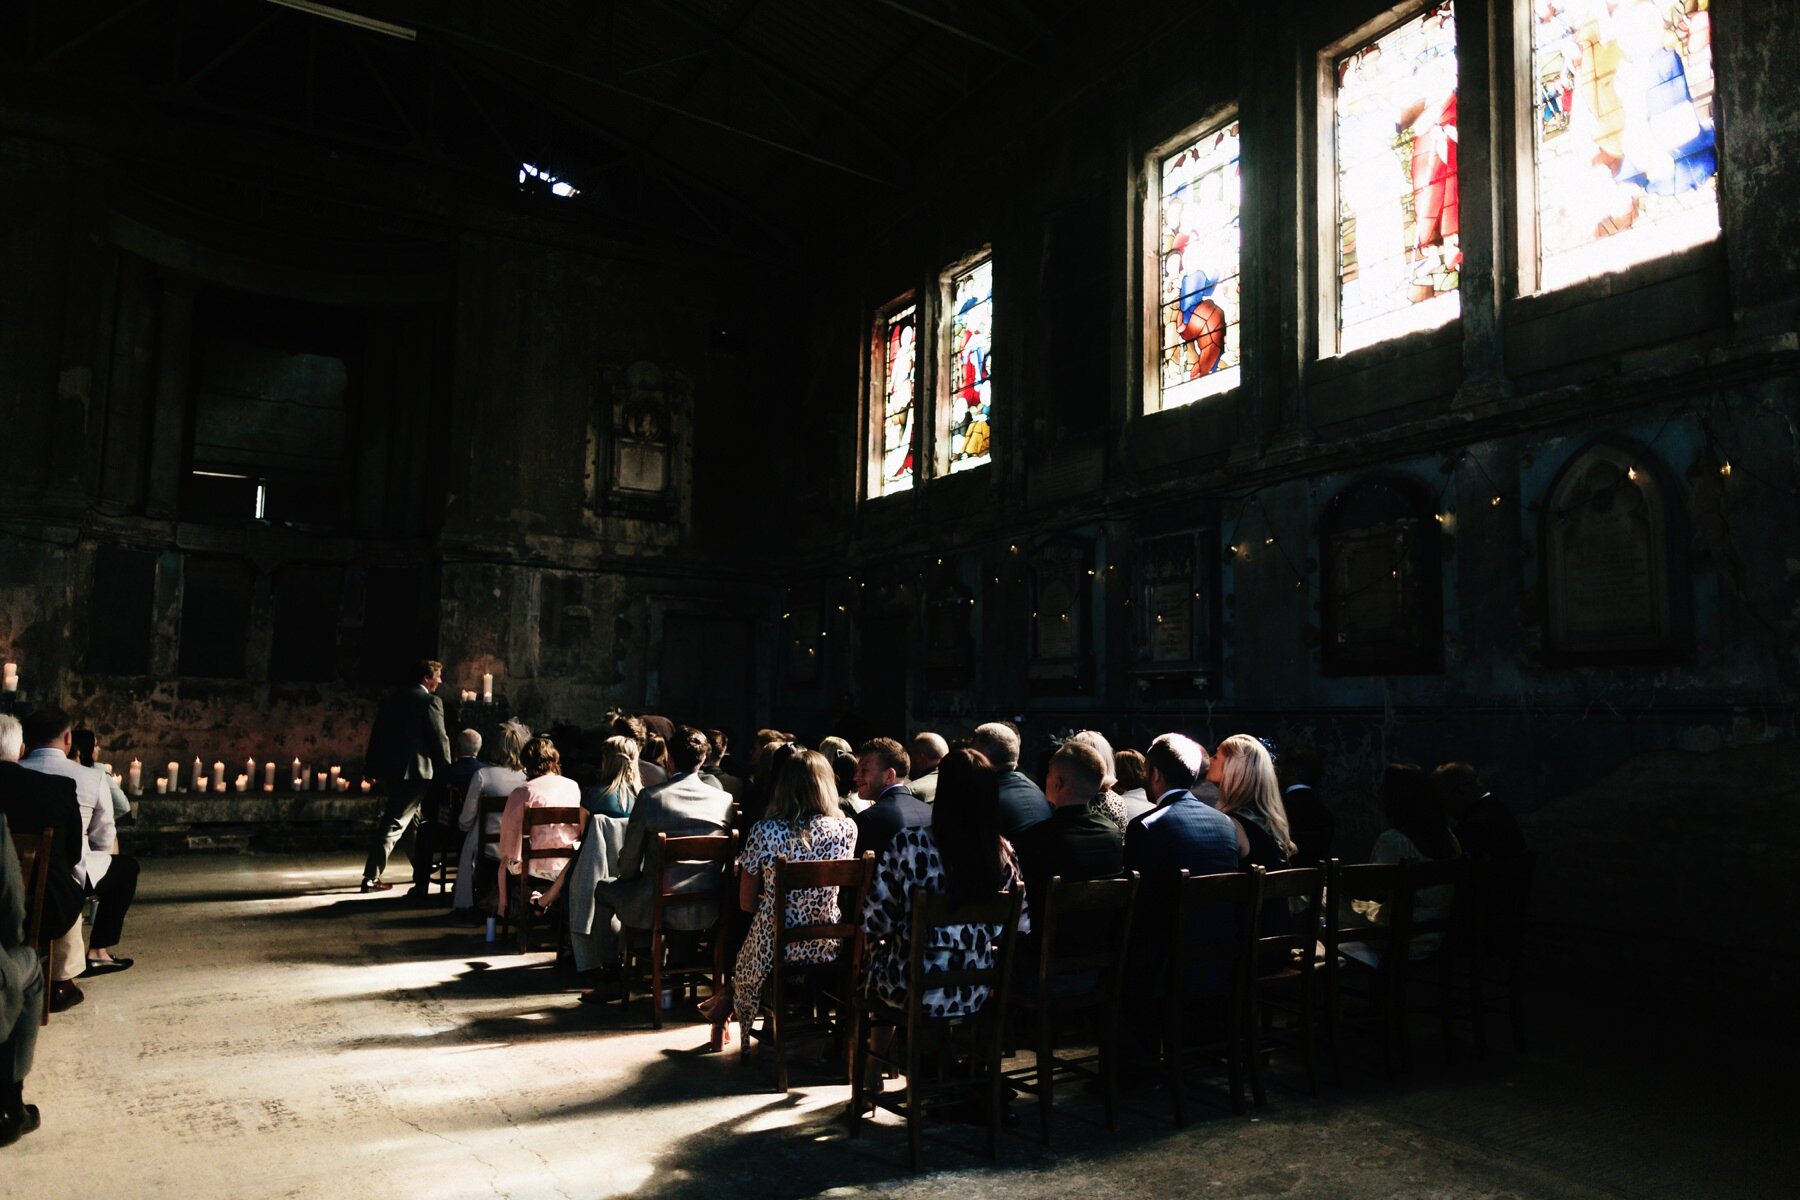 A wedding ceremony in progress at Asylum Chapel in London.